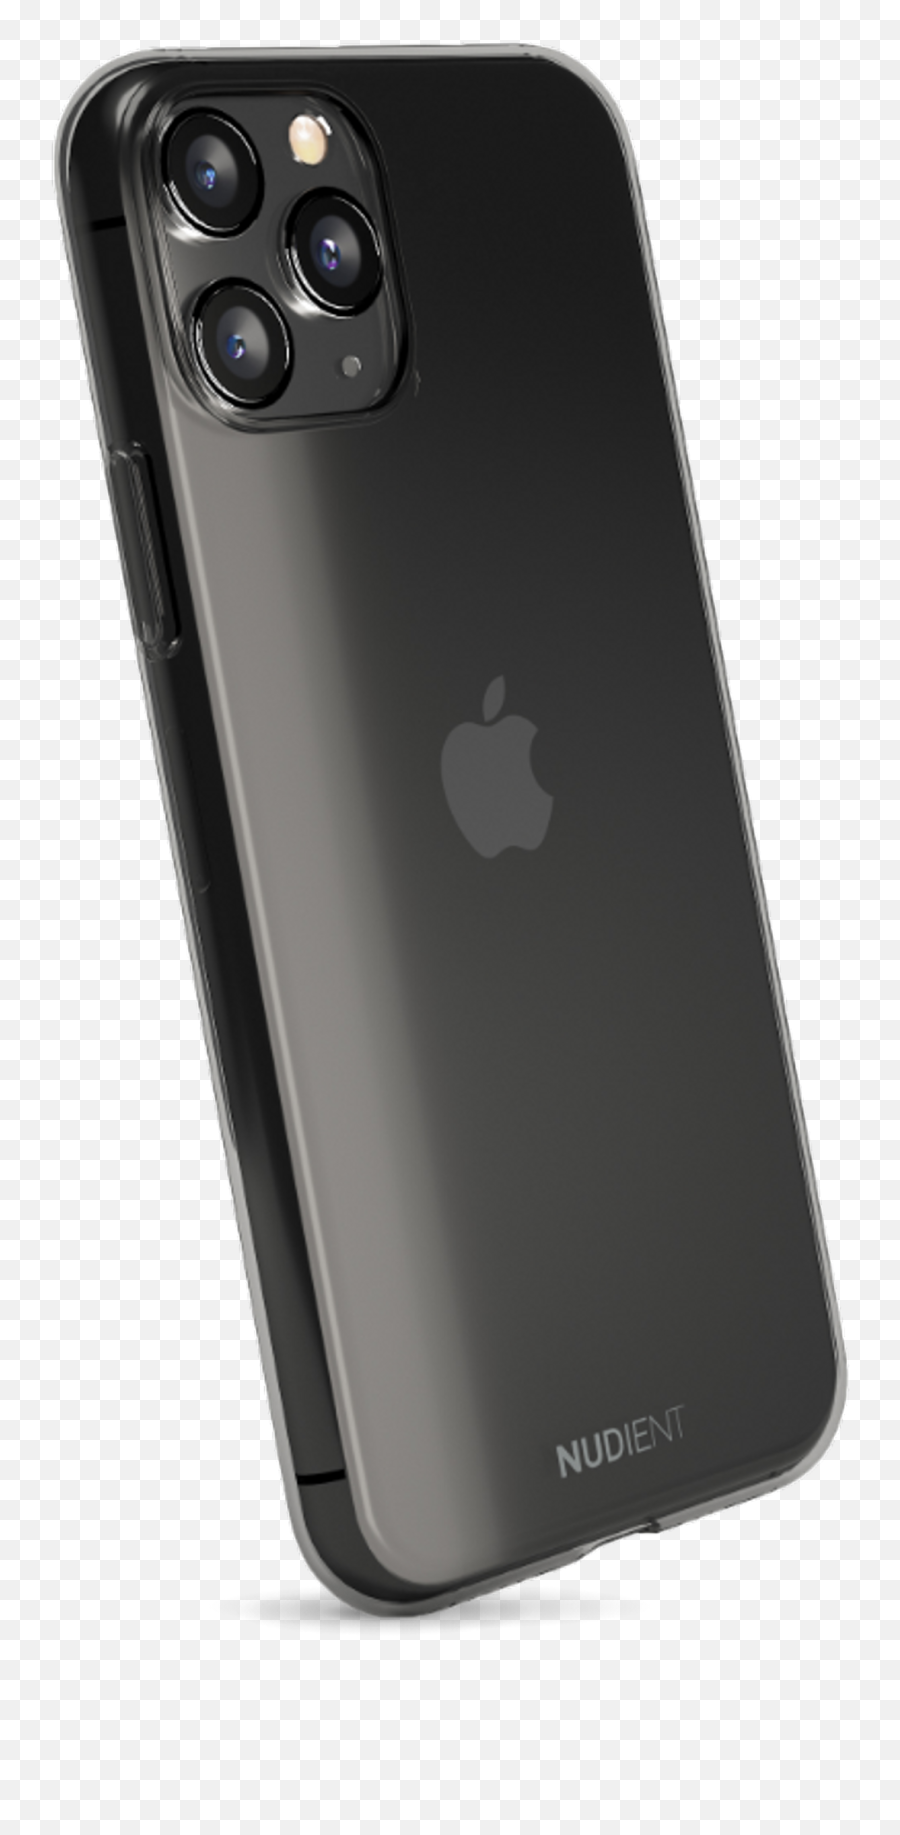 Thin Glossy Case - Black Transparent Iphone 11 Pro Max Emoji,Iphone 11 Transparent